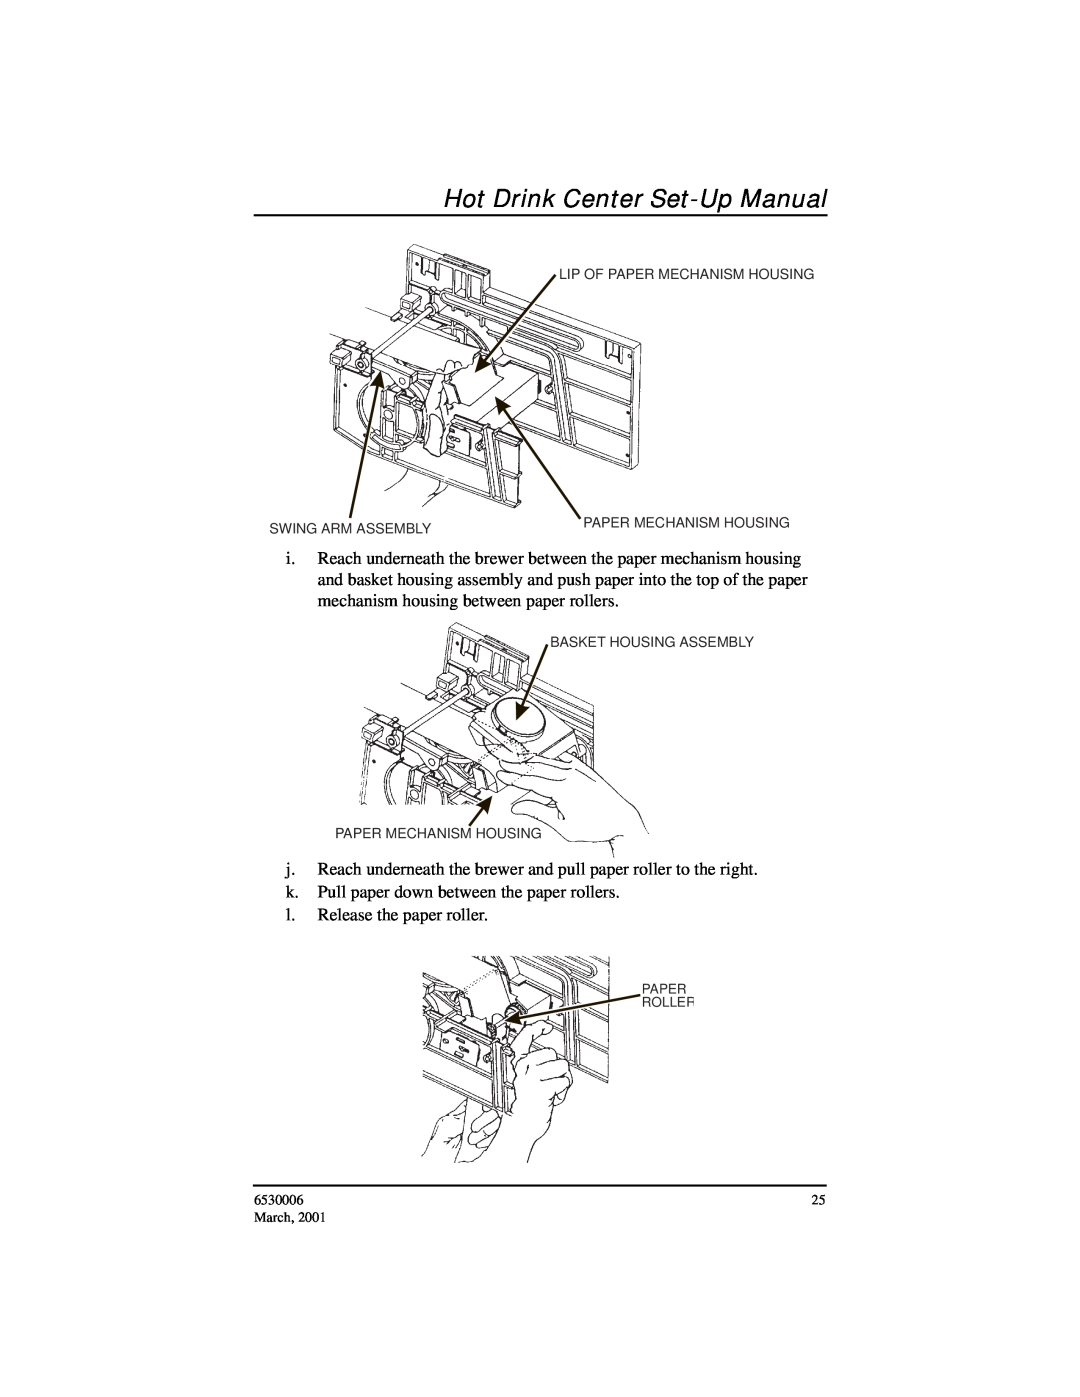 Crane Merchandising Systems 6530006 manual Hot Drink Center Set-Up Manual 